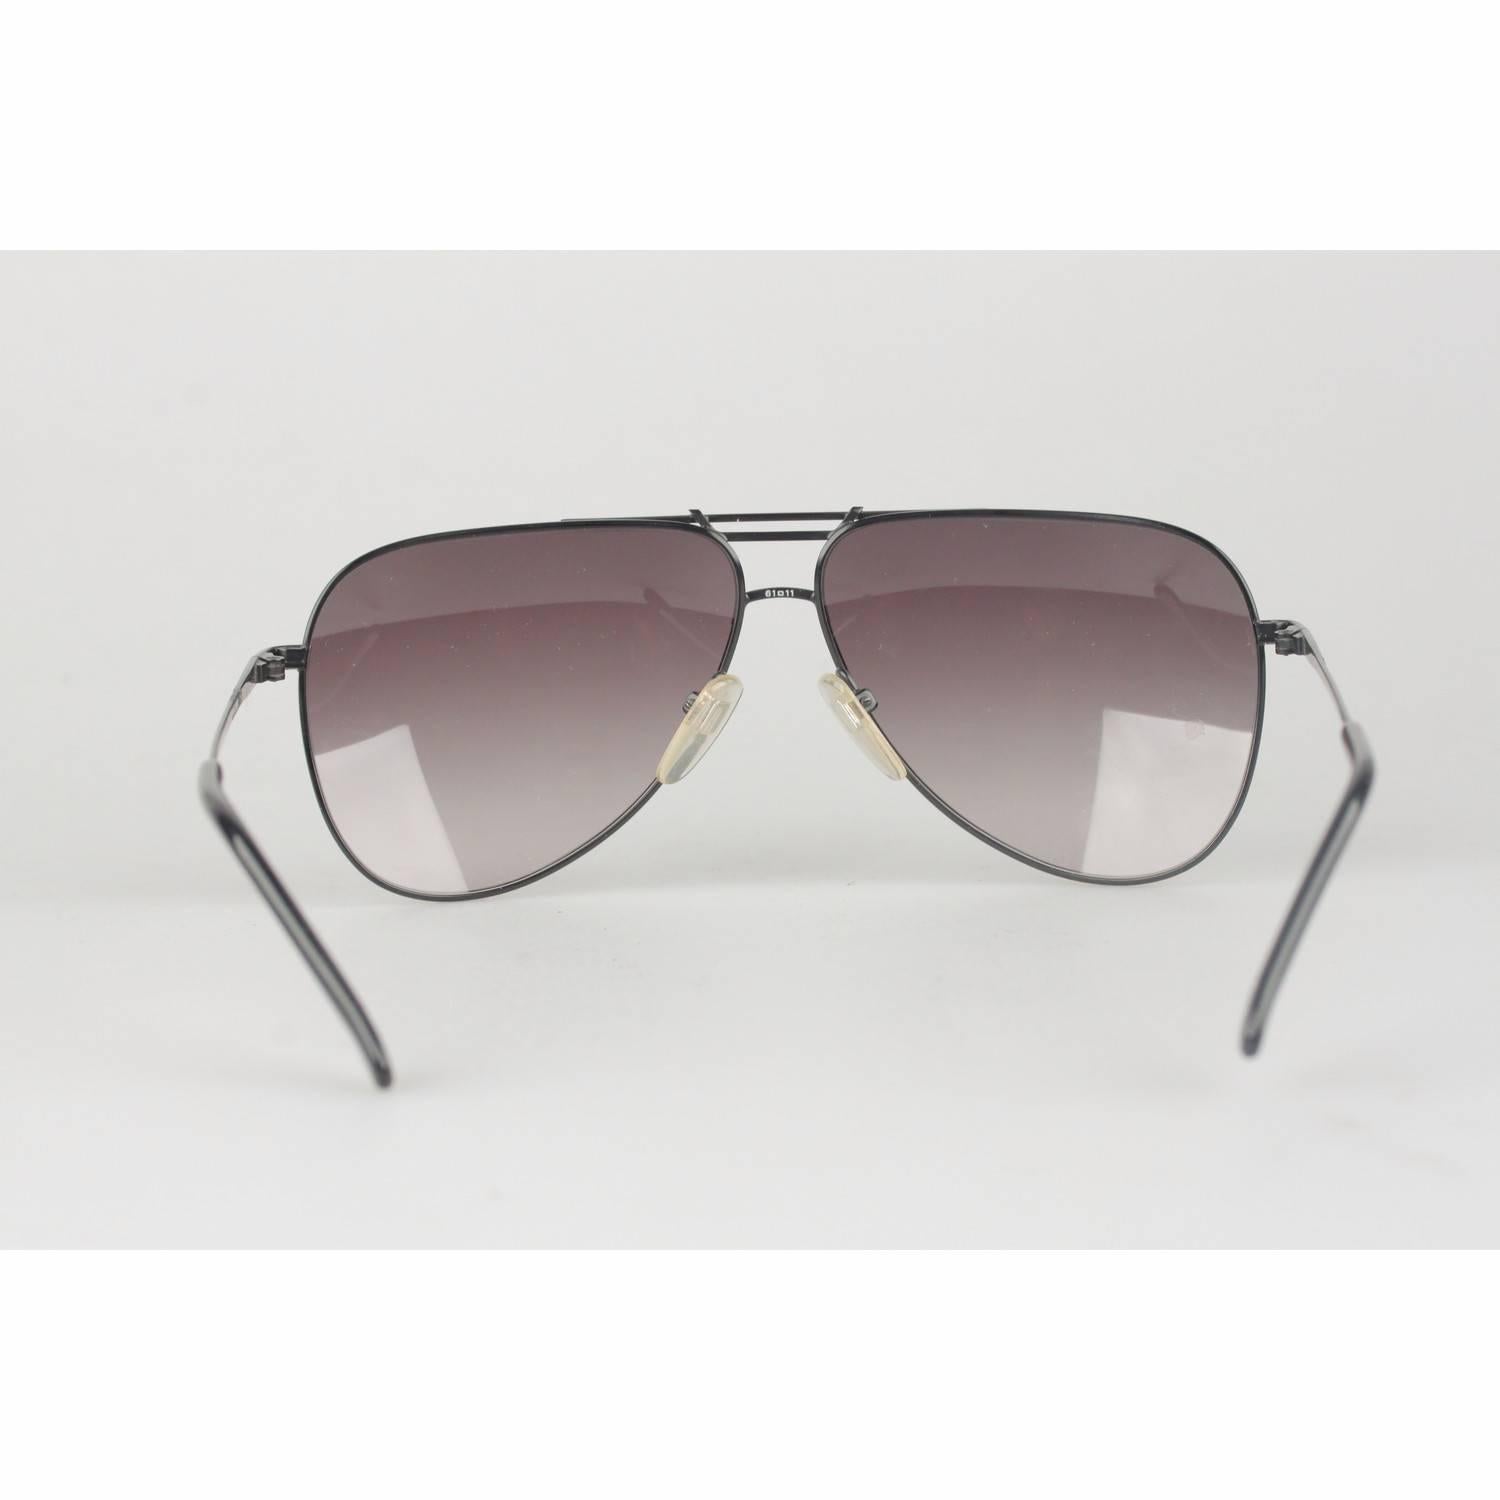 nikon sunglasses for sale